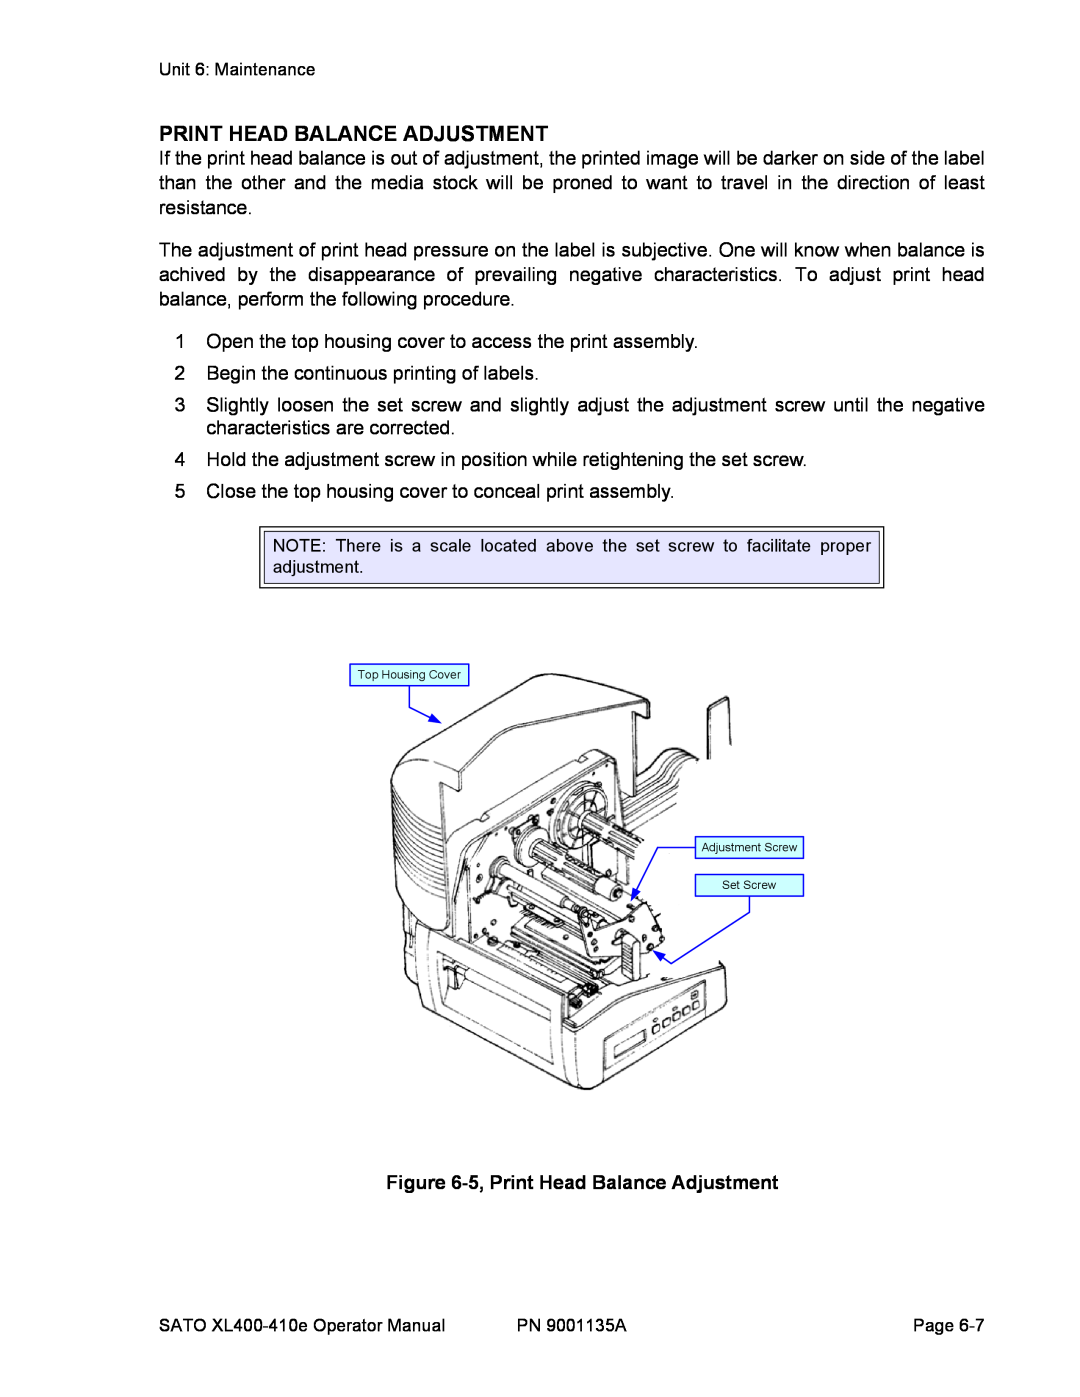 SATO 400e, 410e manual 5, Print Head Balance Adjustment 